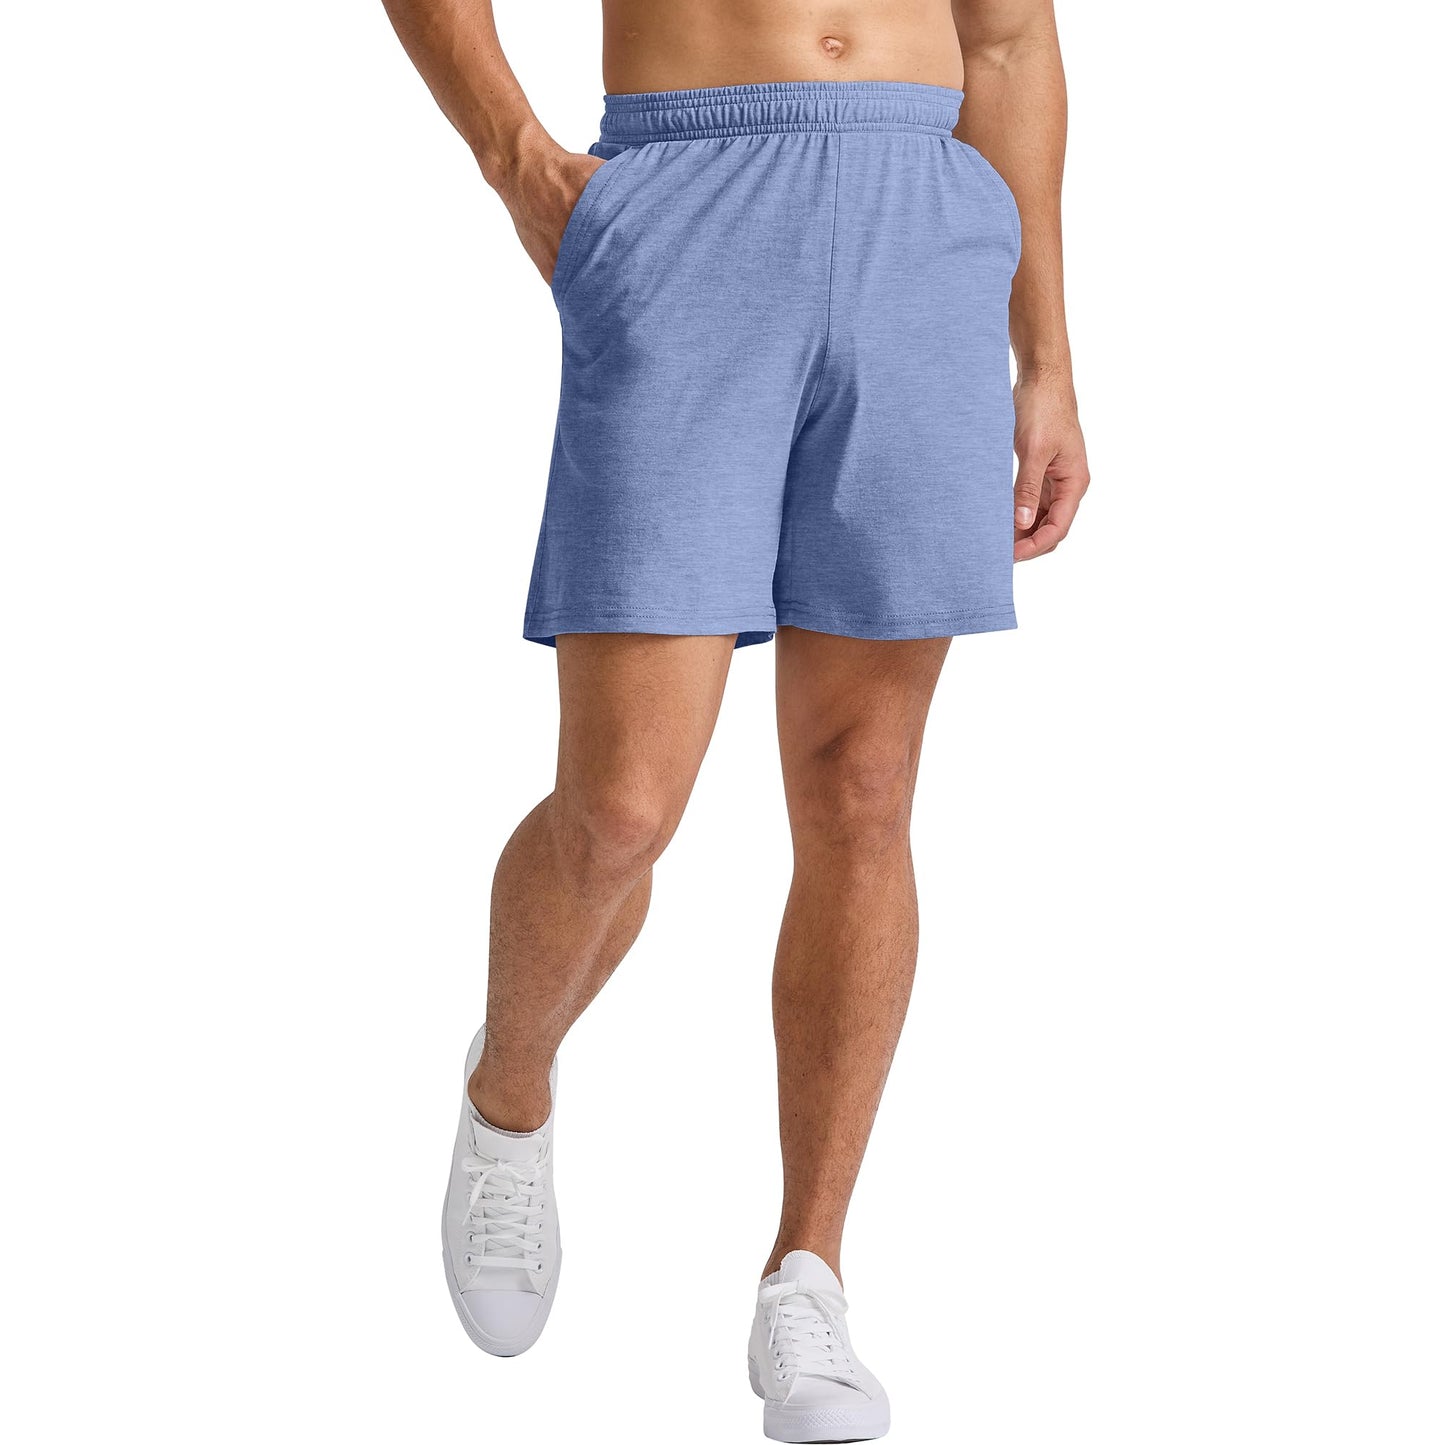 Hanes Men's Originals Tri-Blend, Lightweight Pull-On Jersey Shorts with Pockets, DEEP Forte Blue PE Heather